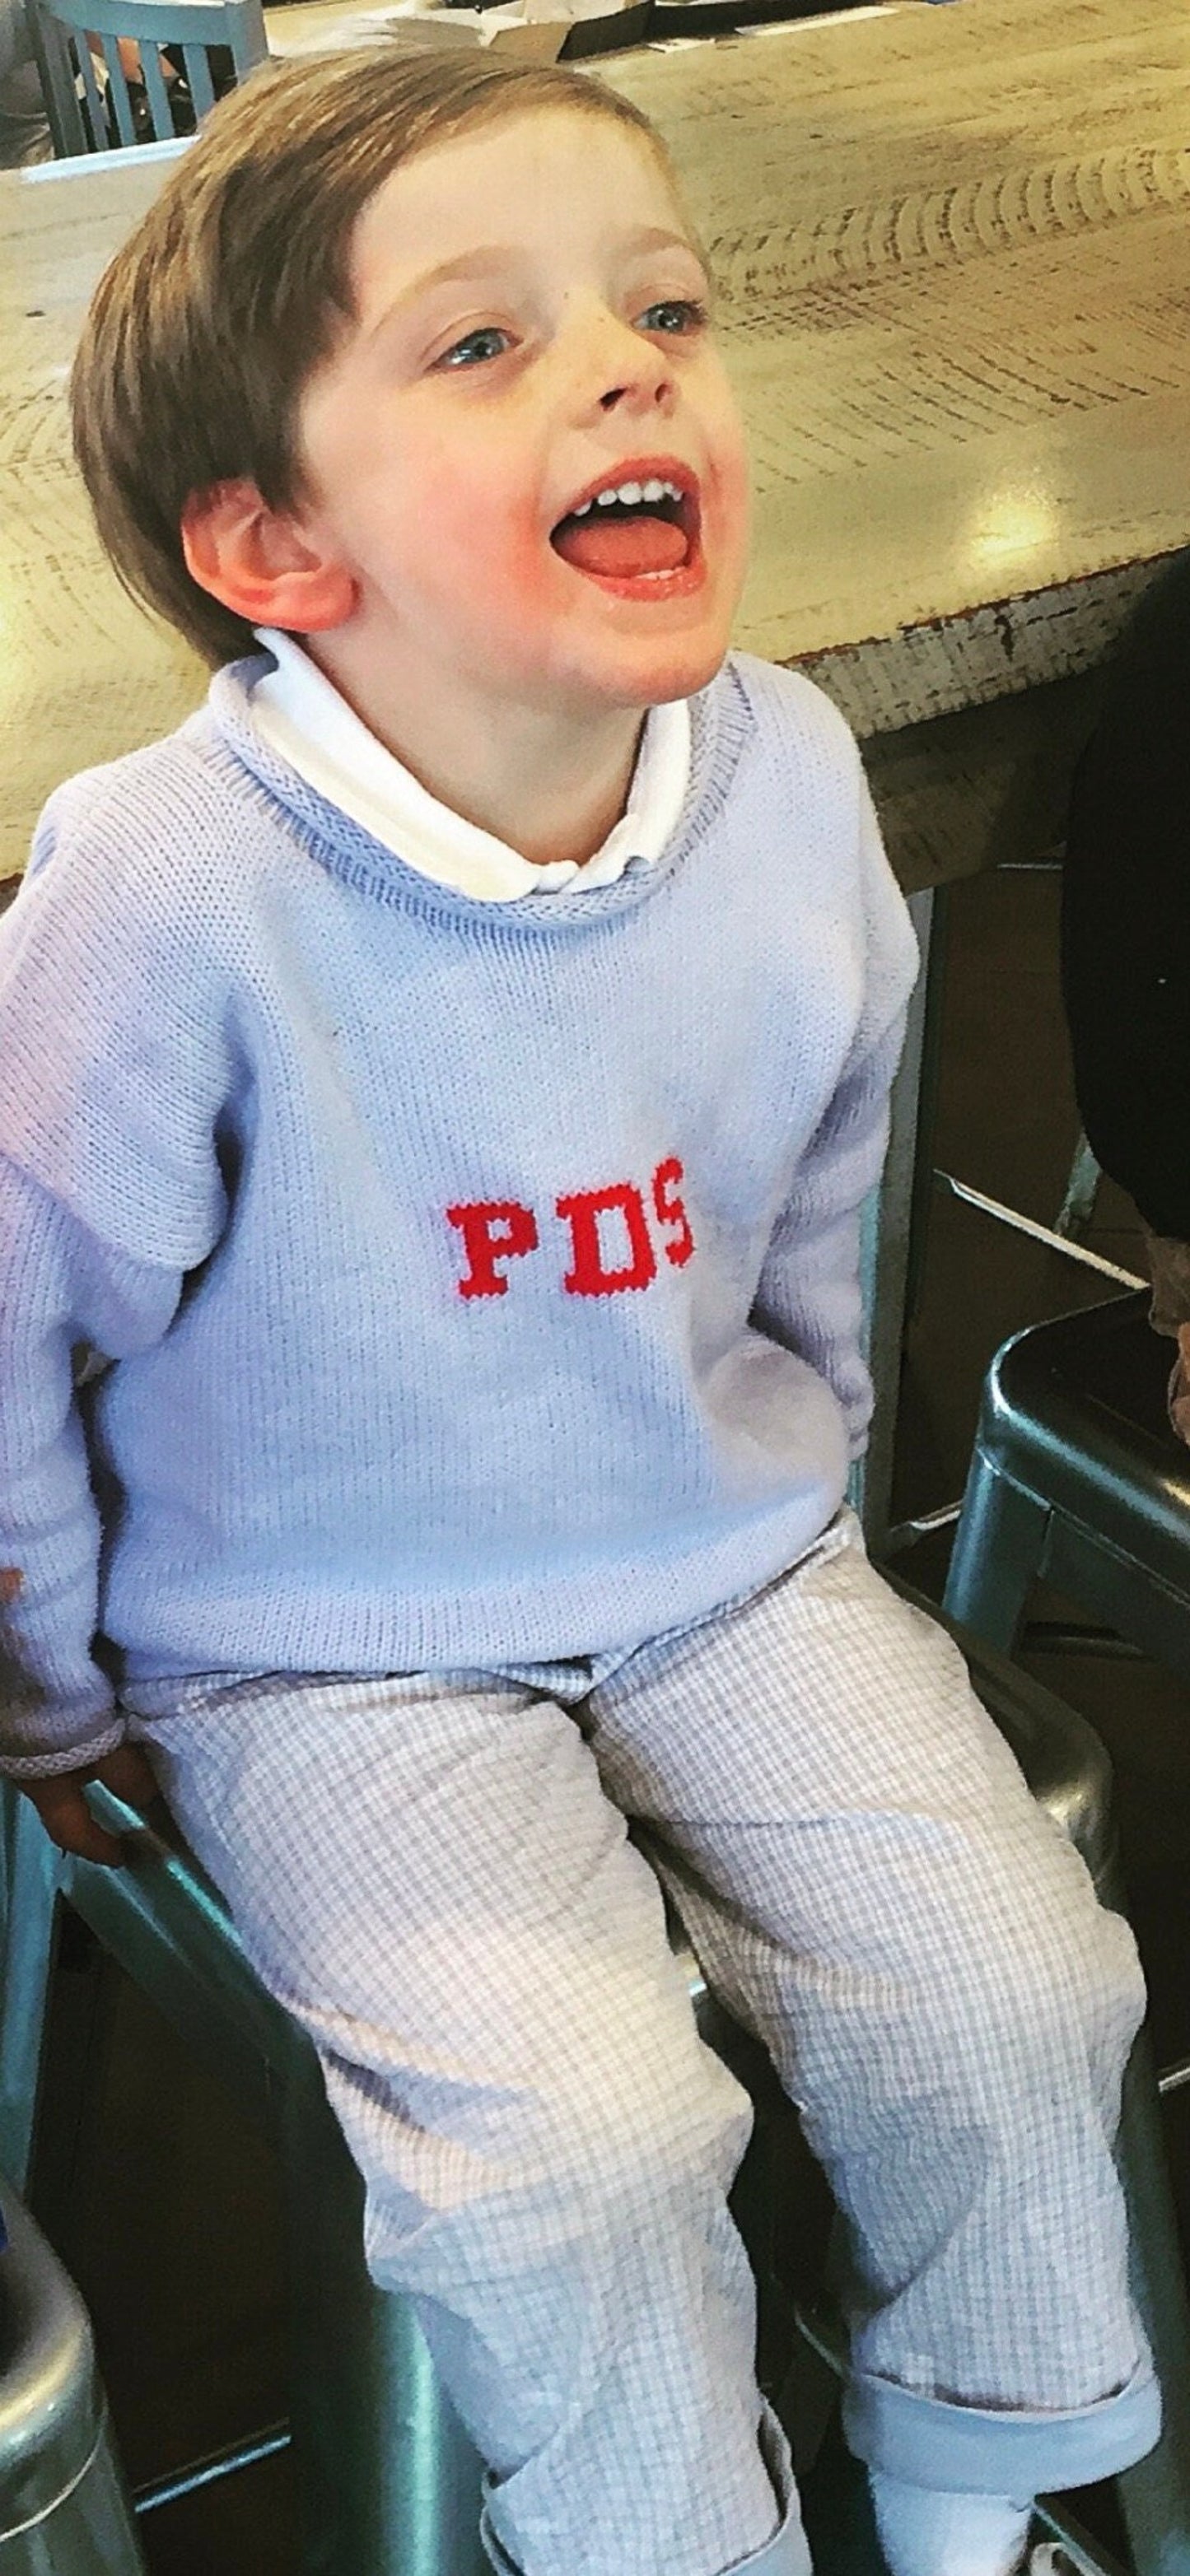 PDS custom school sweater